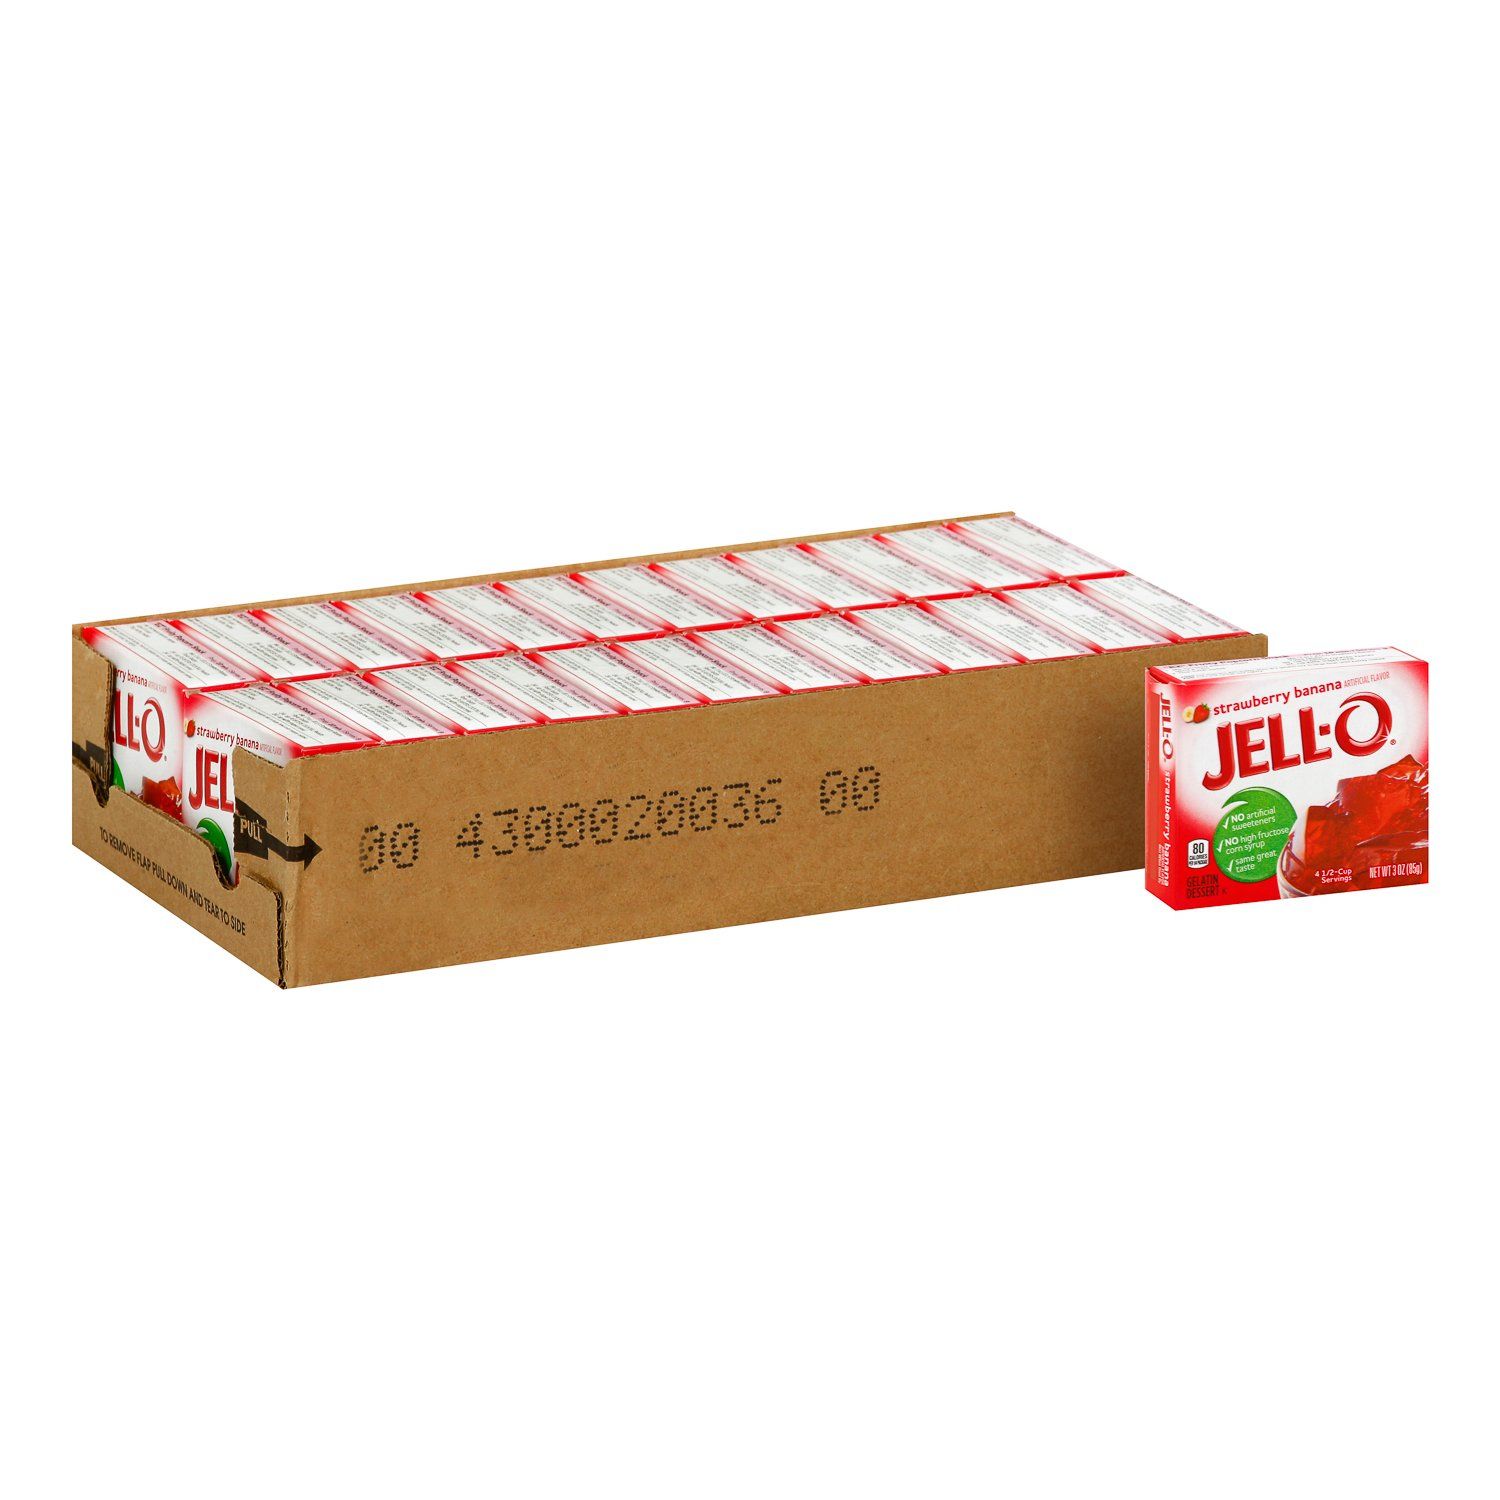 Jell-O Gelatin Mix Jell-O Strawberry Banana 3 Oz-24 Count 